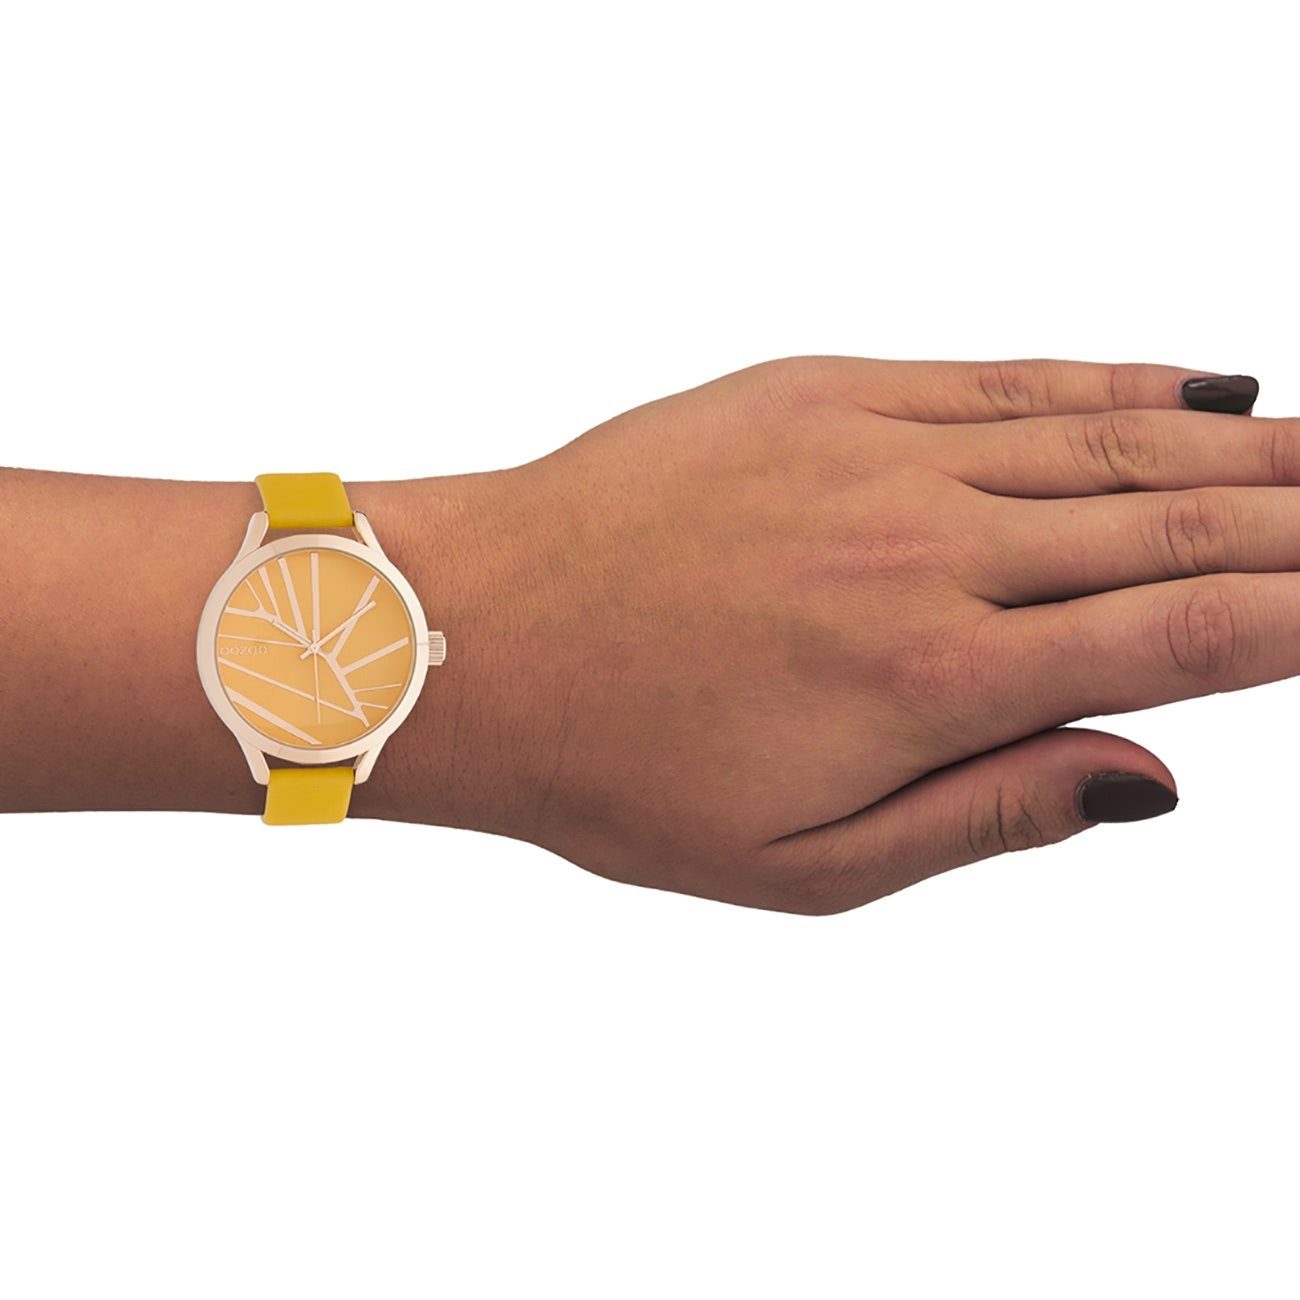 Oozoo Damenuhr Armbanduhr Lederarmband gelb, groß Fashion OOZOO (ca. OOZOO Timepieces, 43mm), Quarzuhr rund, Damen